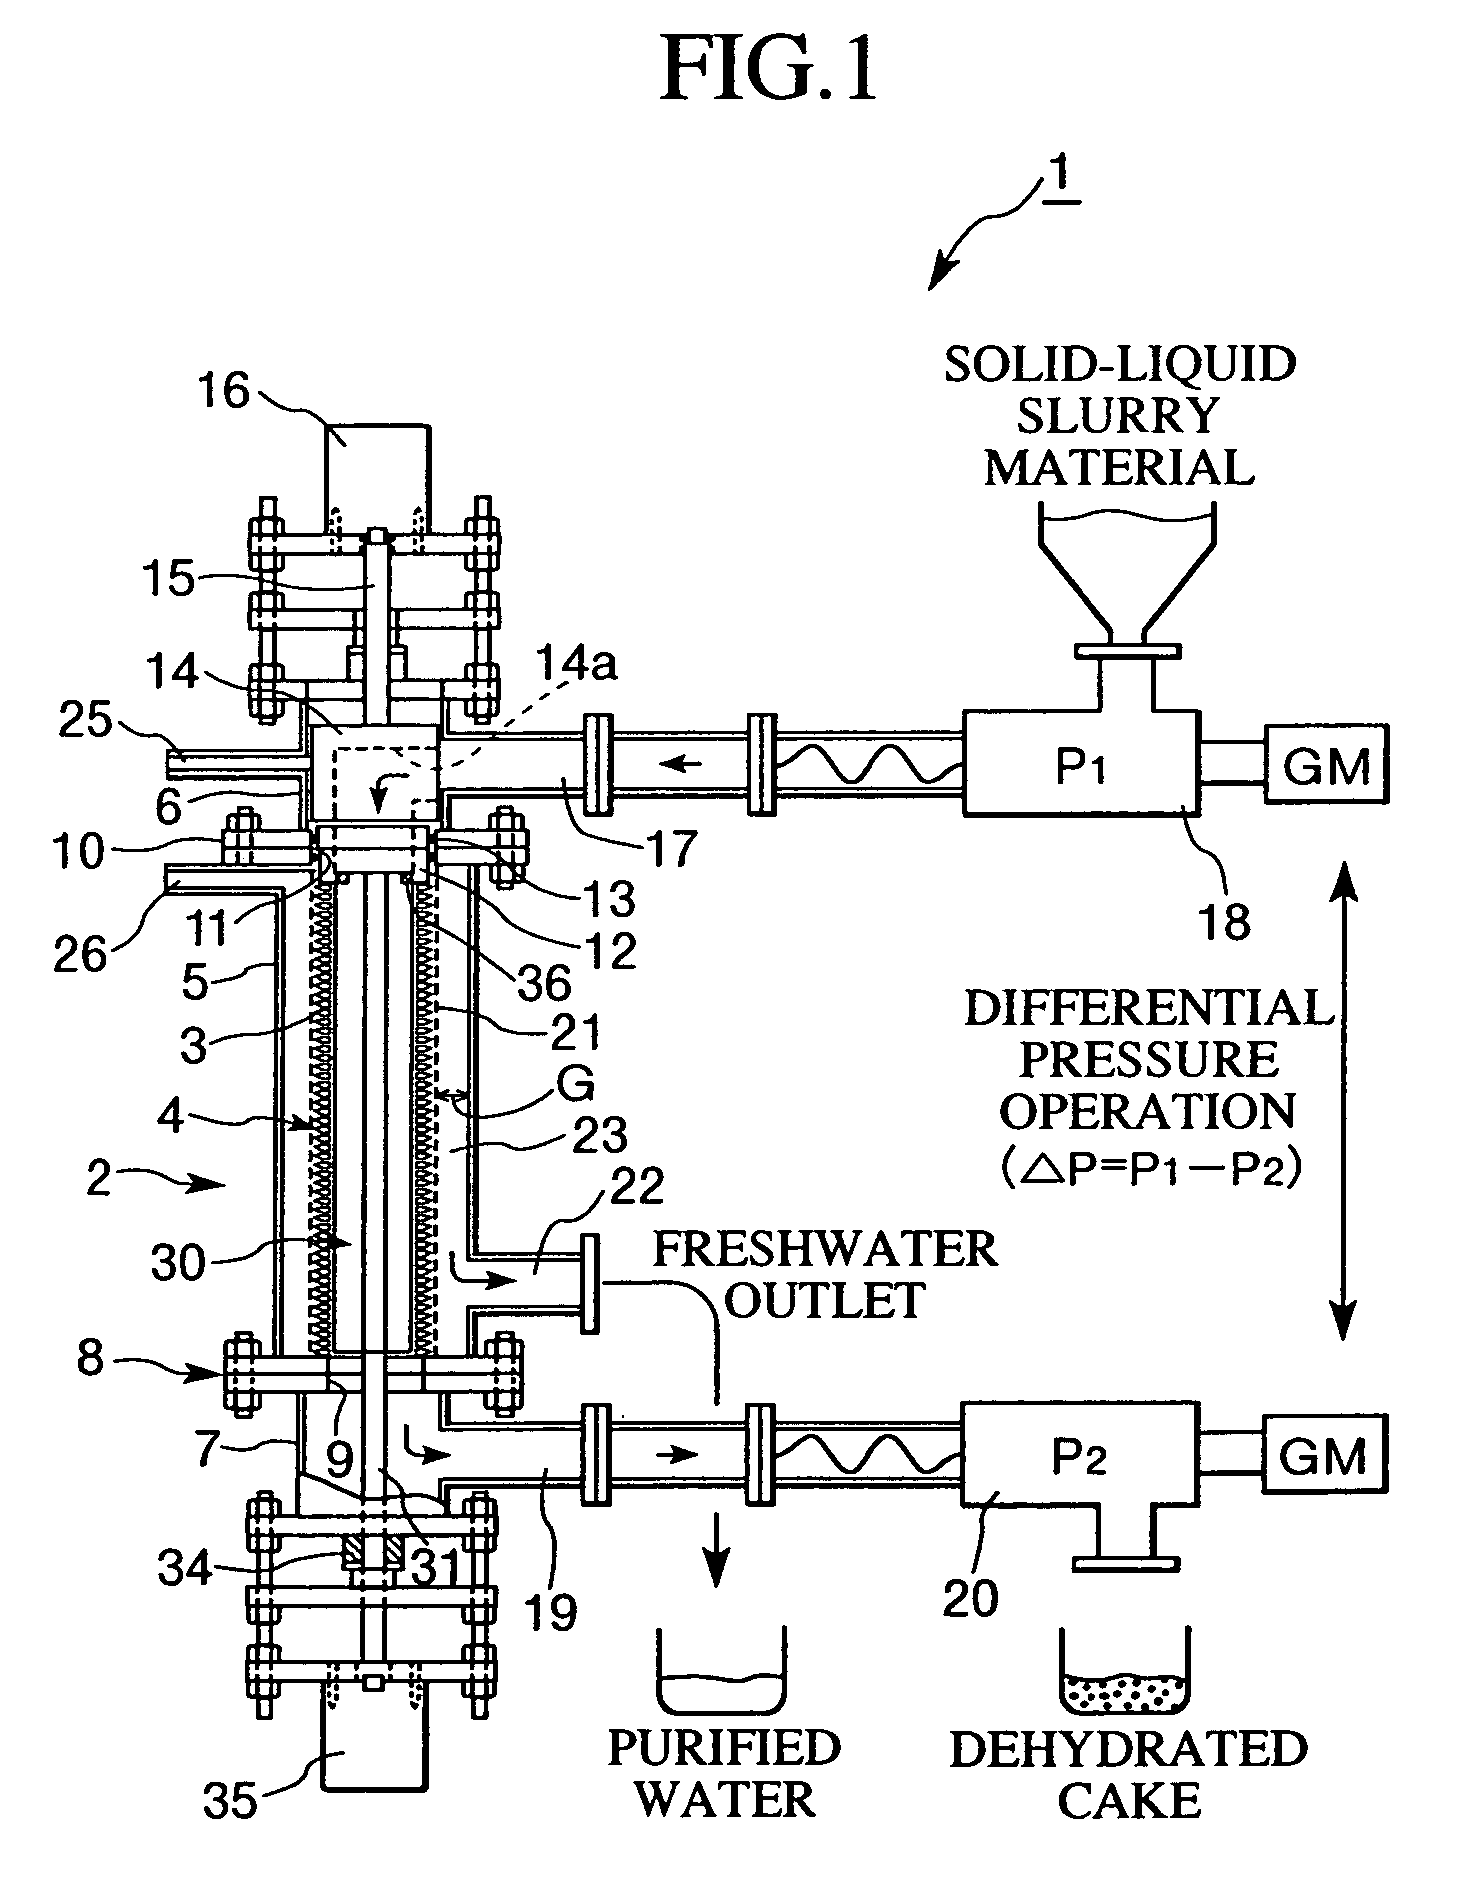 Fluid treating method and apparatus